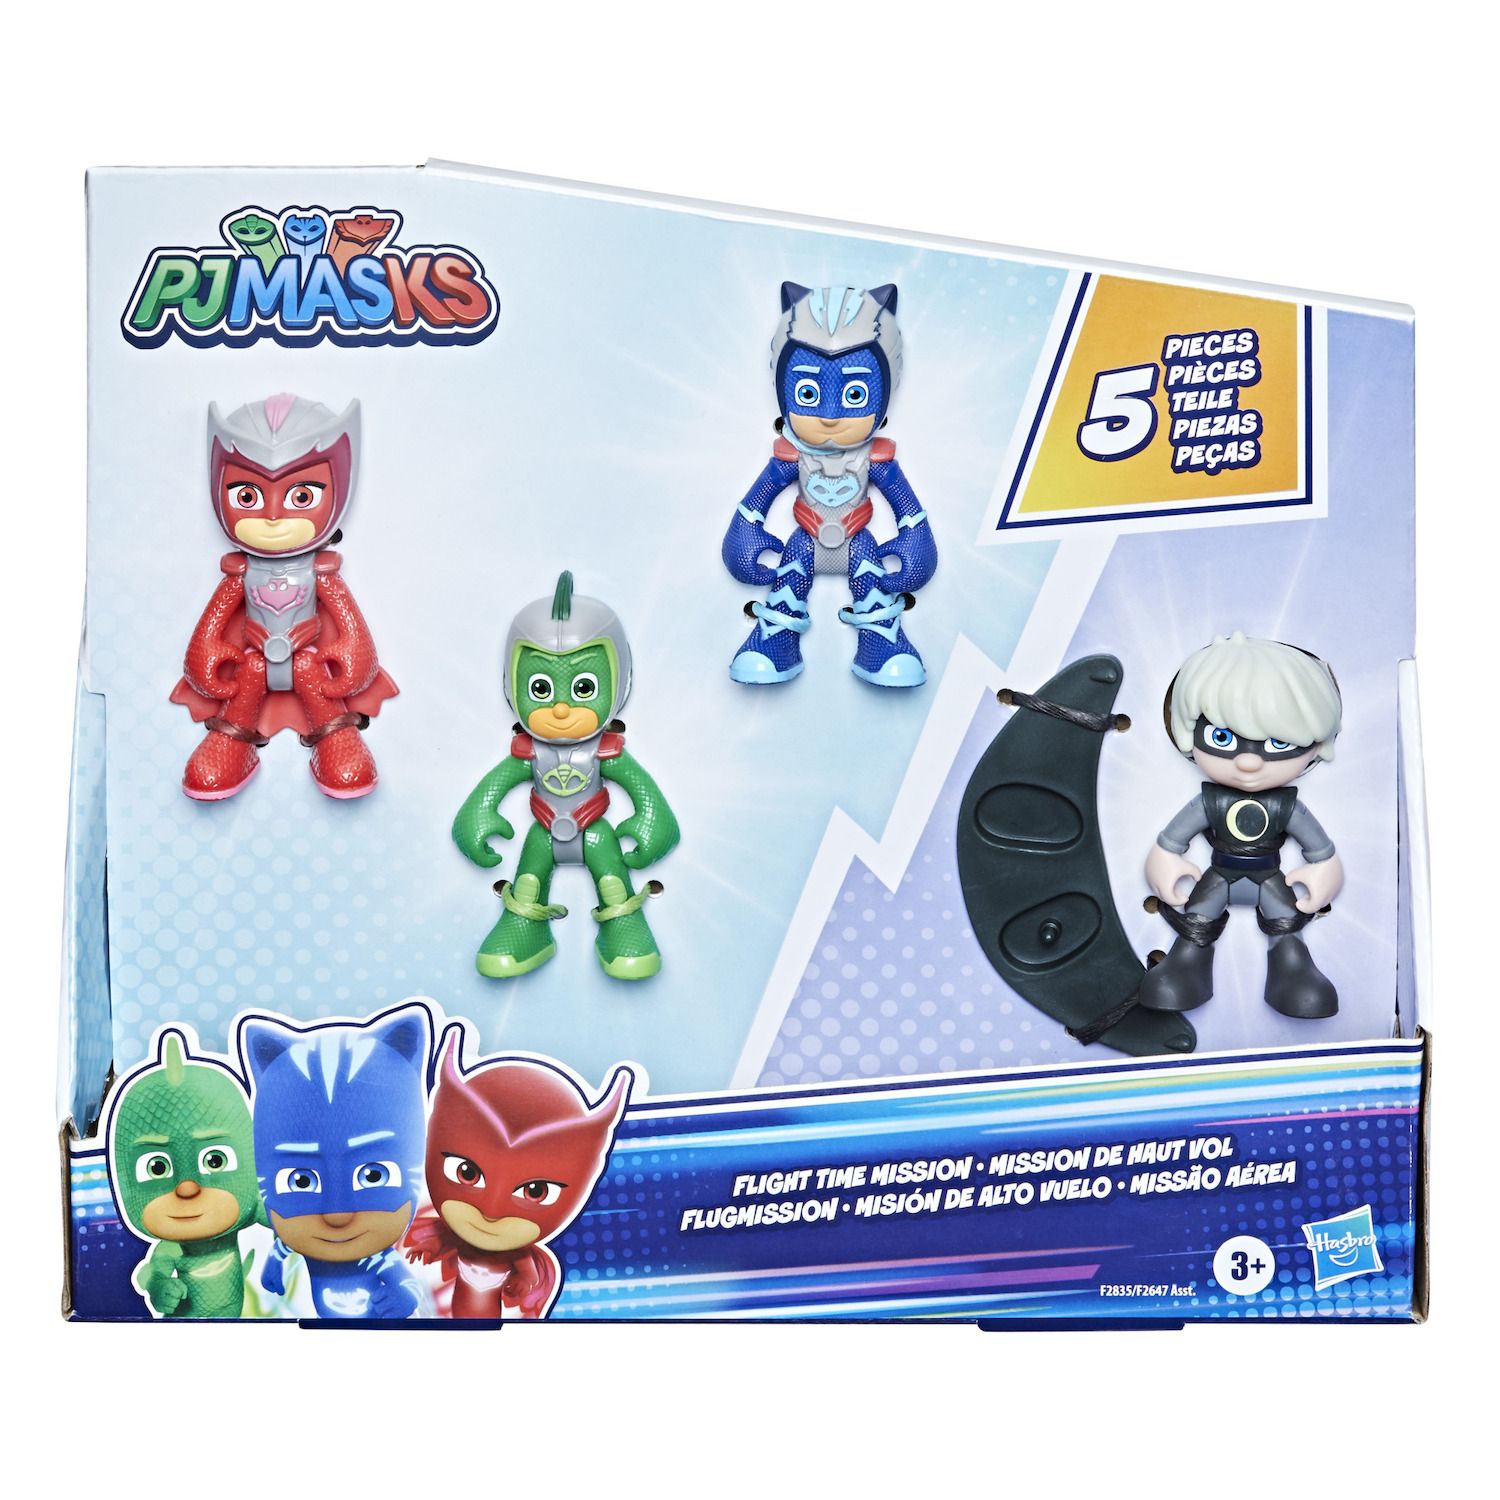 Image for Hasbro PJ Masks Hero Vs. Villain Action Figure Toy Packs by at Kohl's.